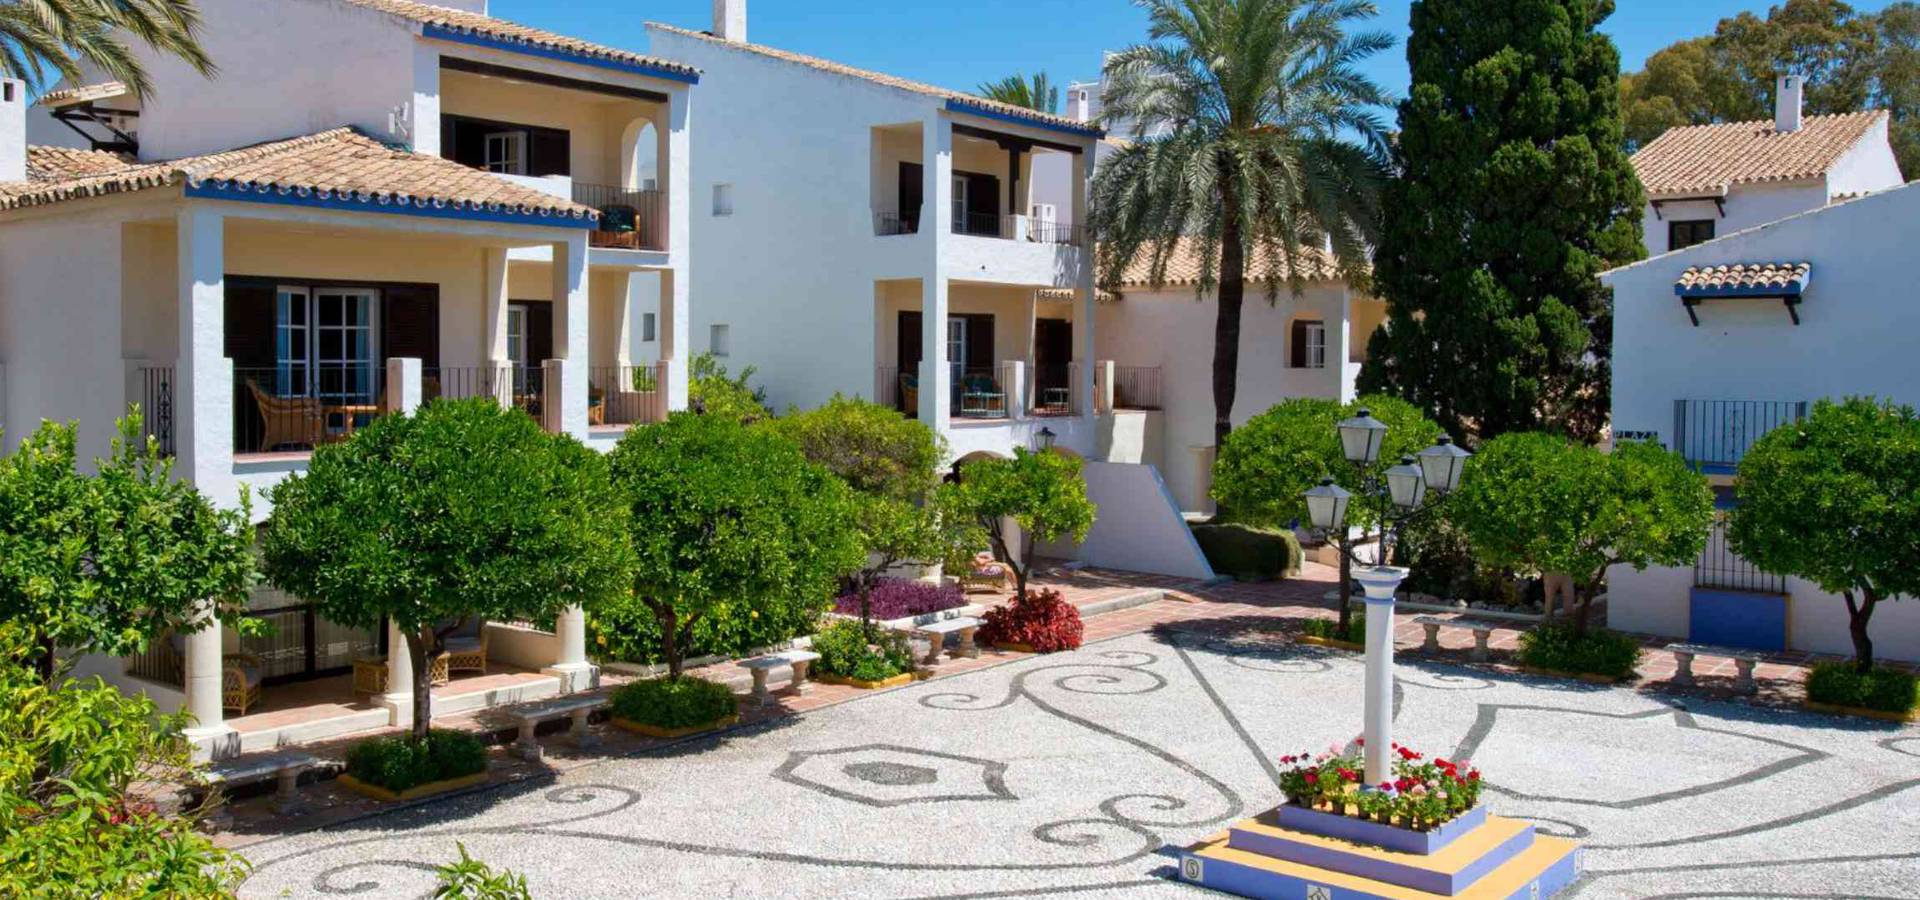 HOTEL BLUEBAY BANÚS -  Hotel BlueBay Banus Marbella